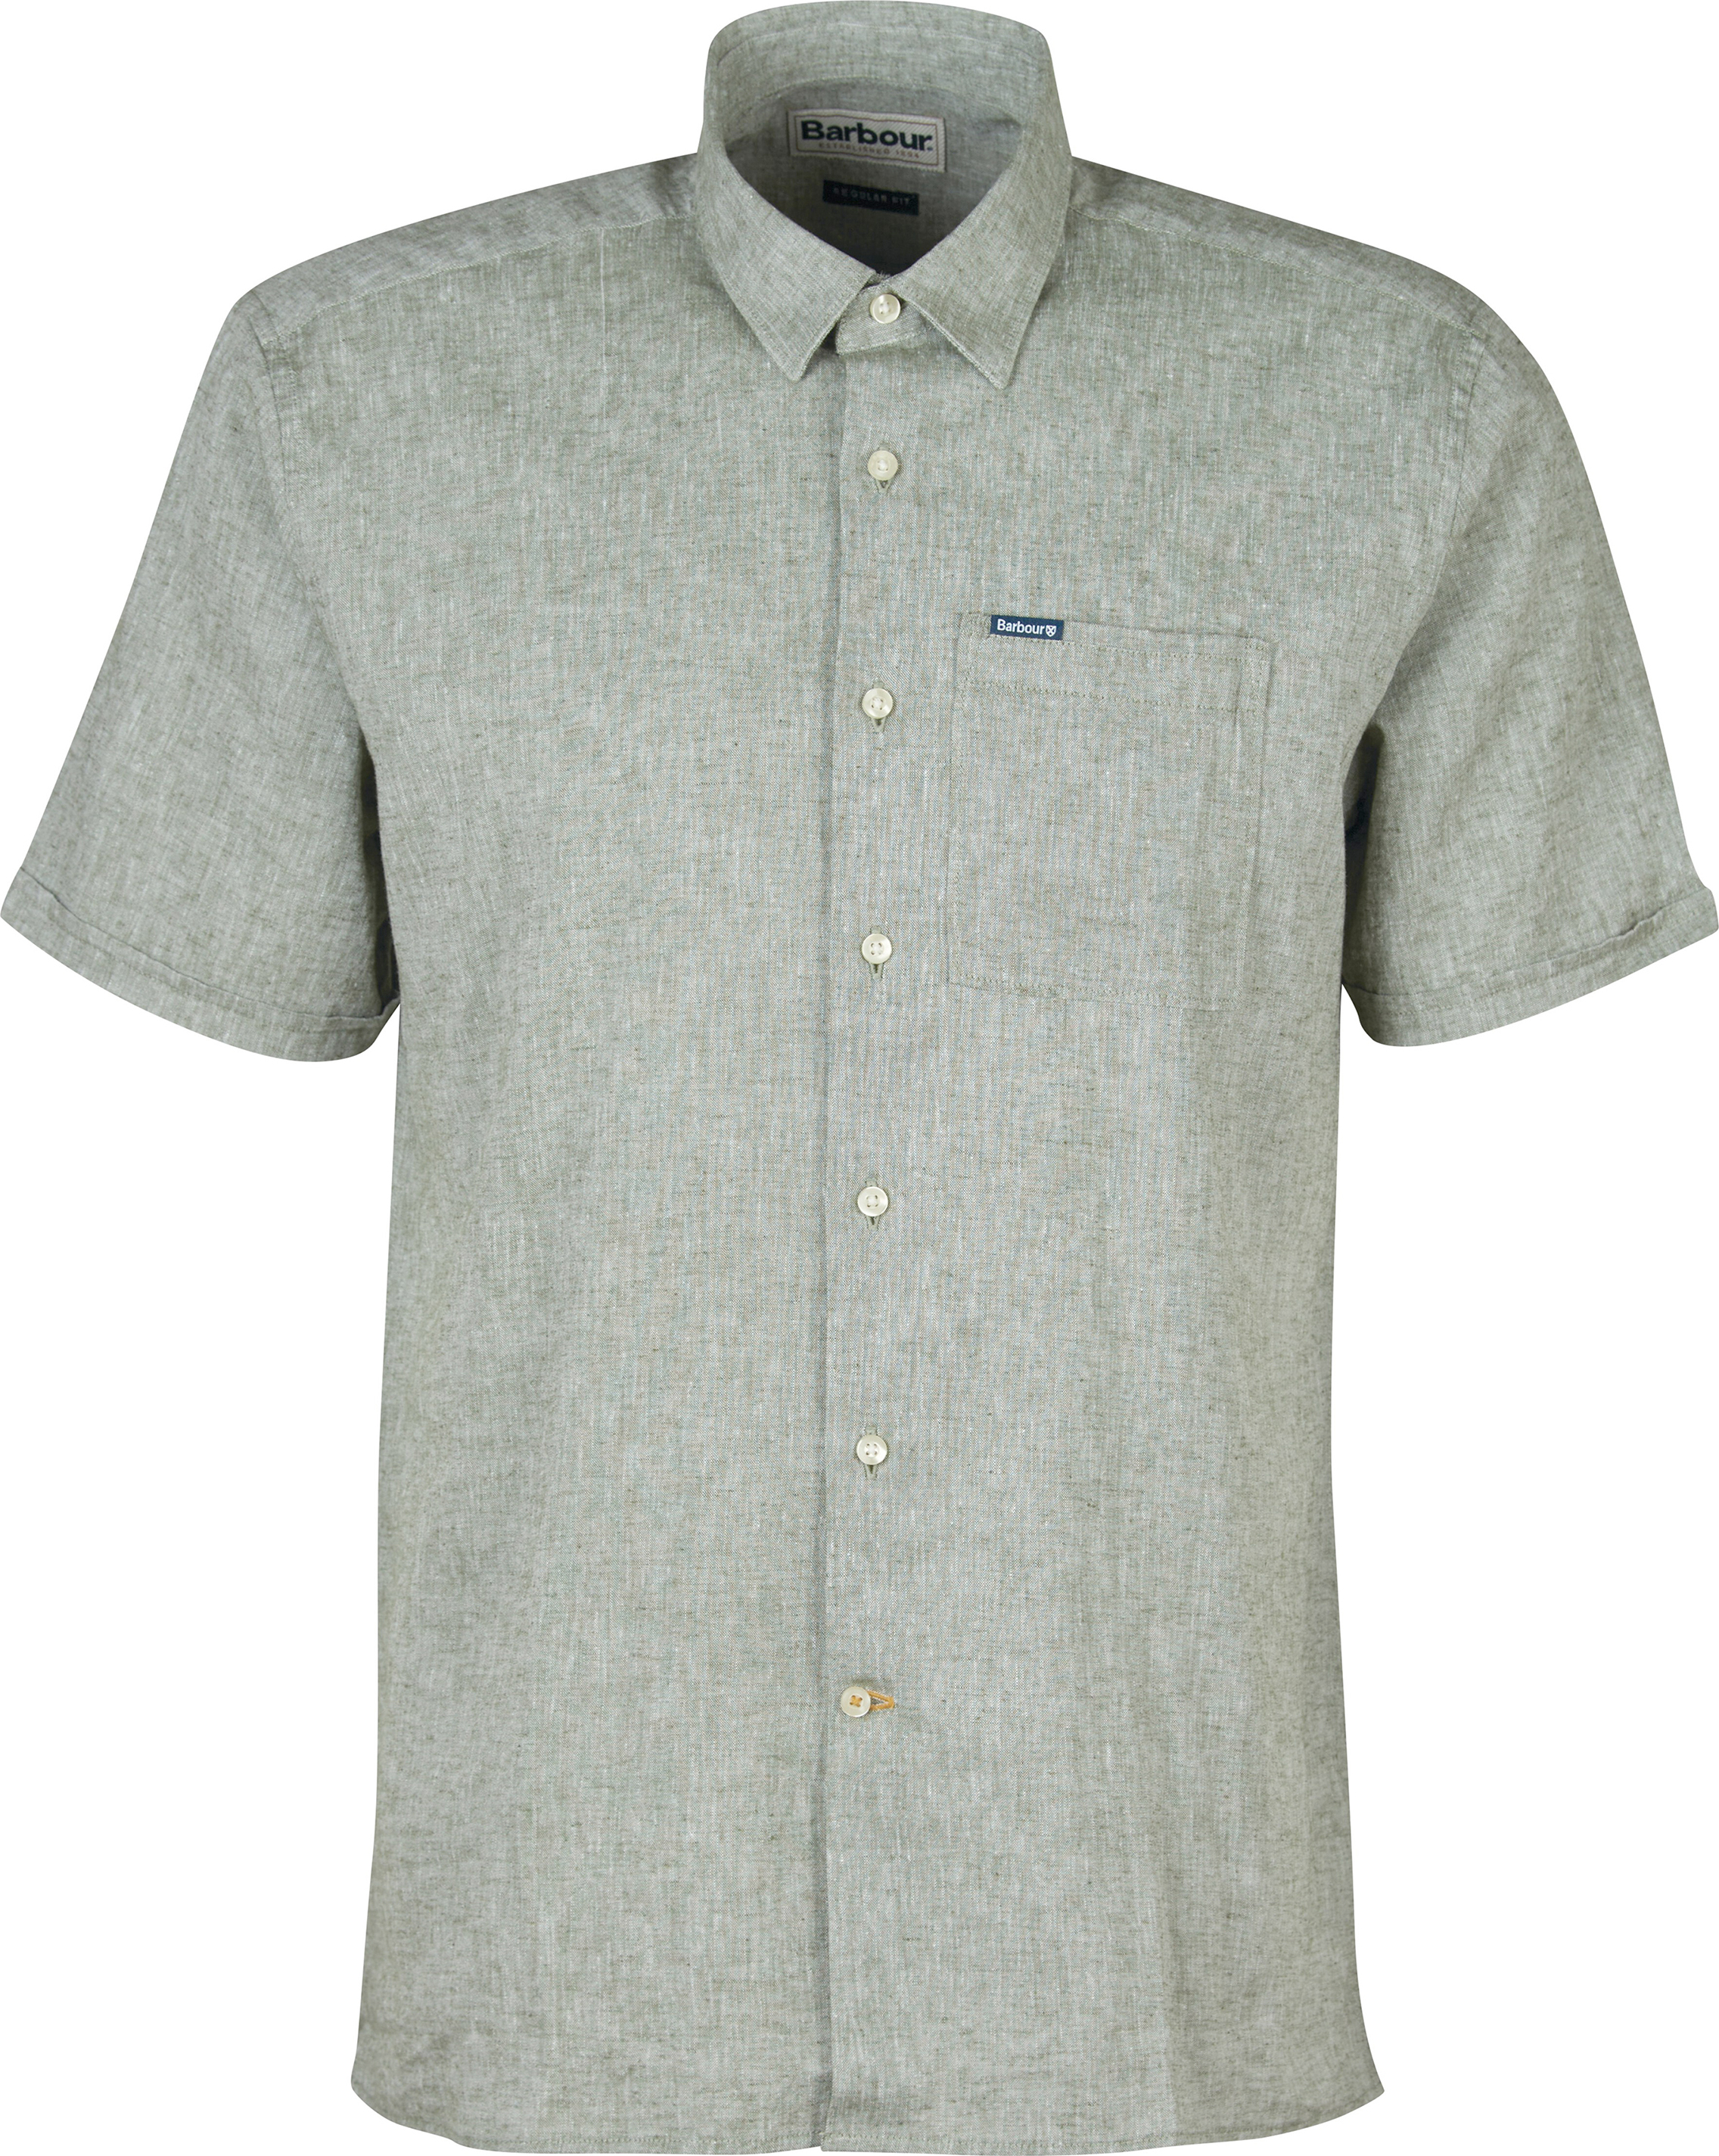 Barbour Men's Nelon Shortsleeve Summer Shirt Bleached Olive XL, Bleached Olive